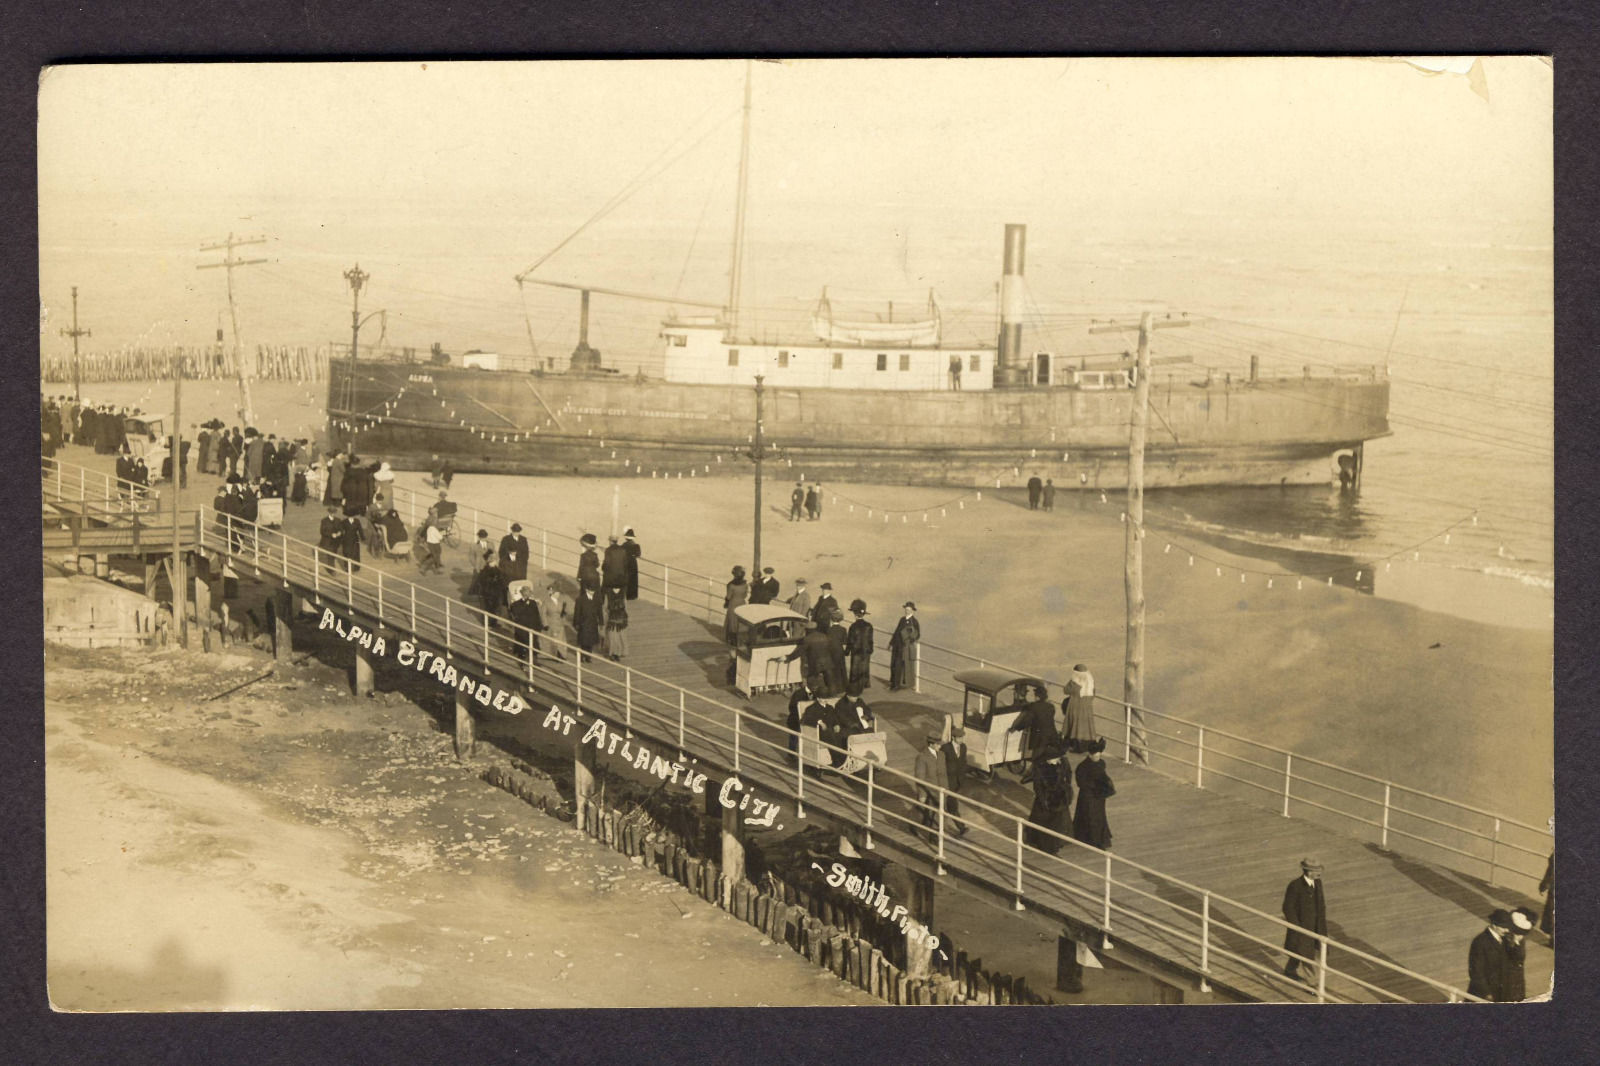 Atlantic City - The stranded steamship Alpha - 1912